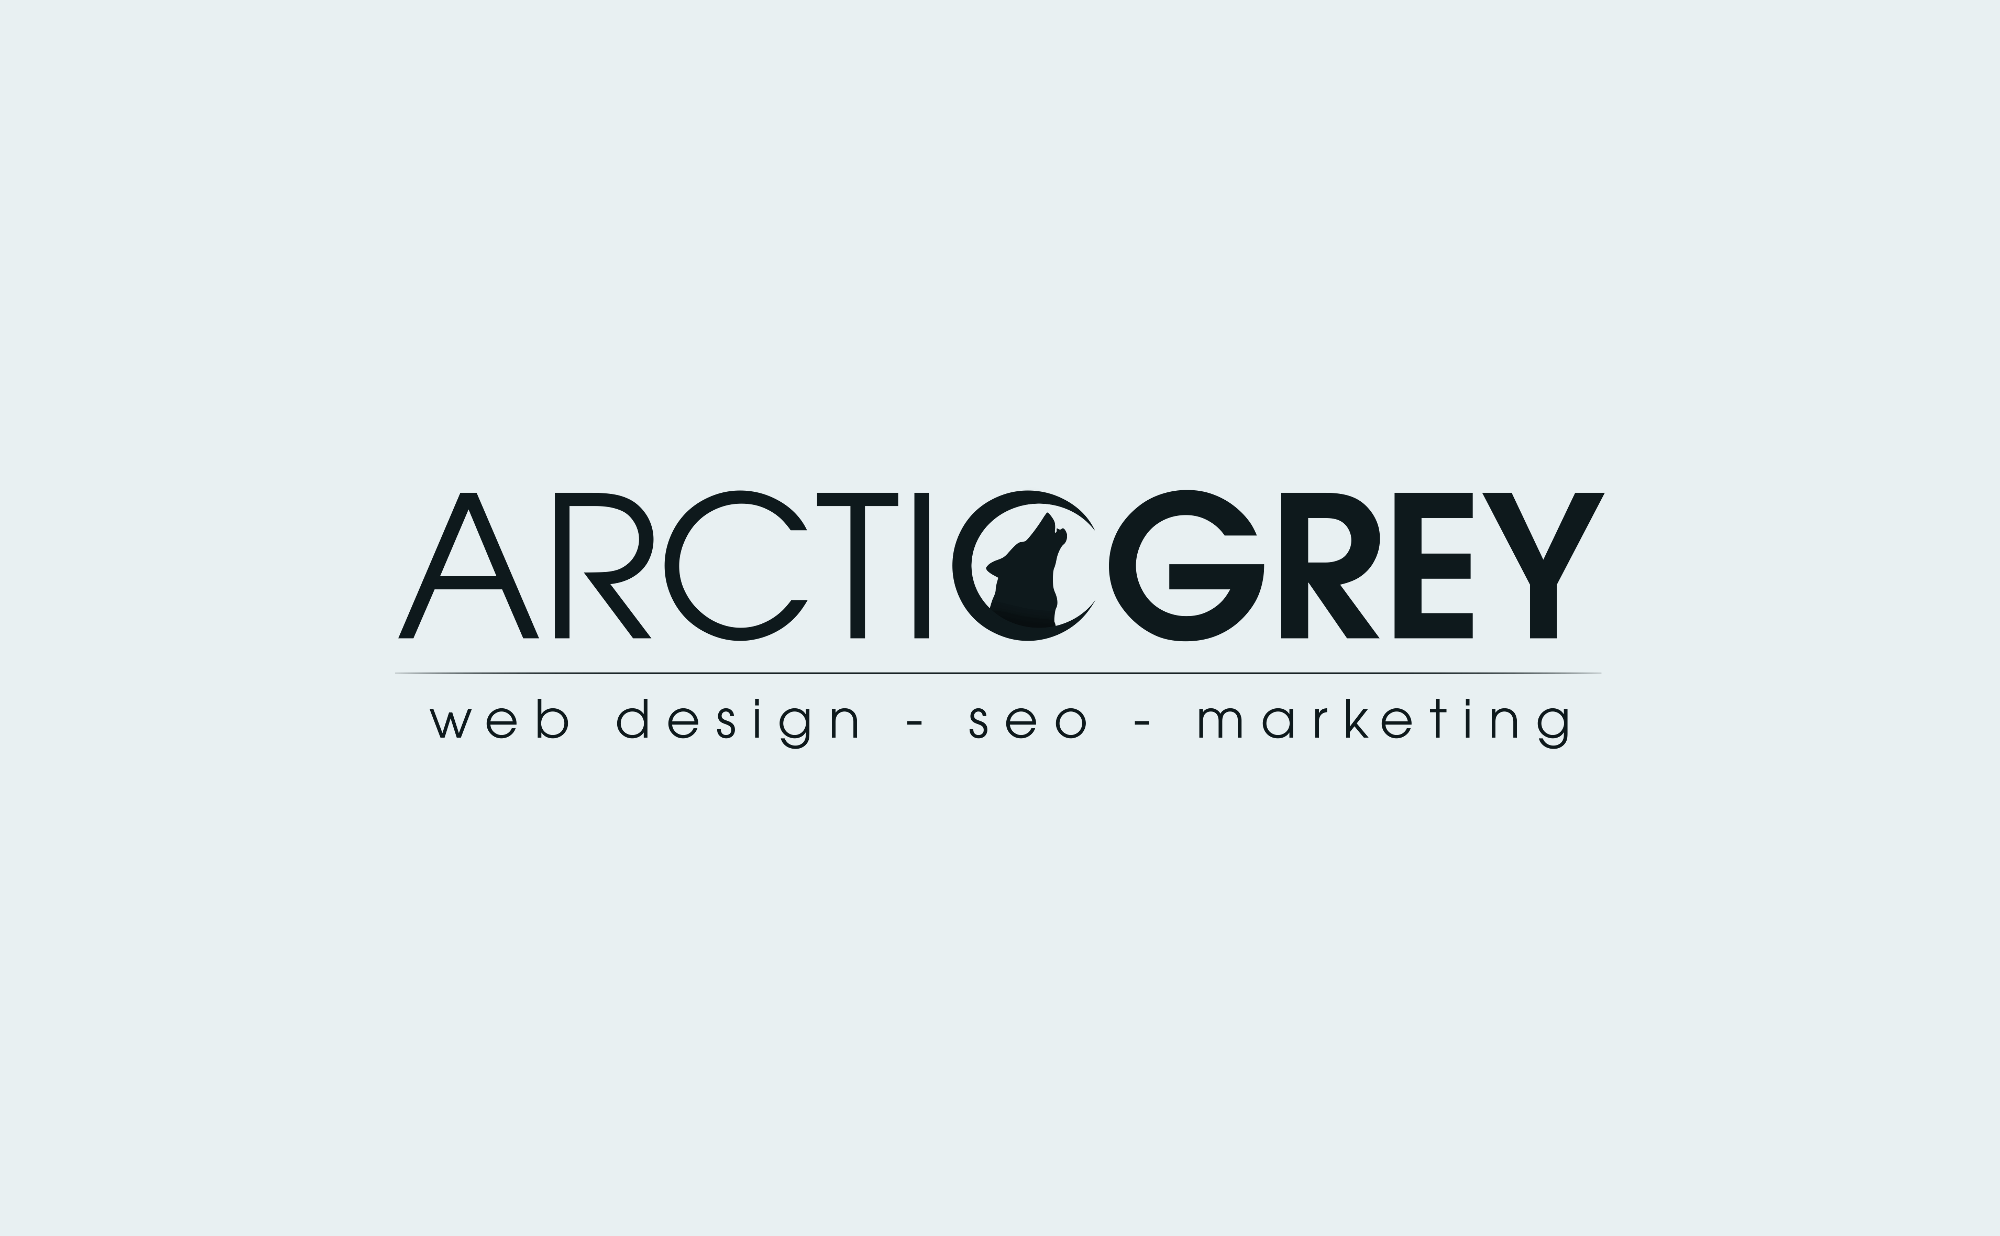 Best Shopify Design Business Logo: Arctic Grey Inc